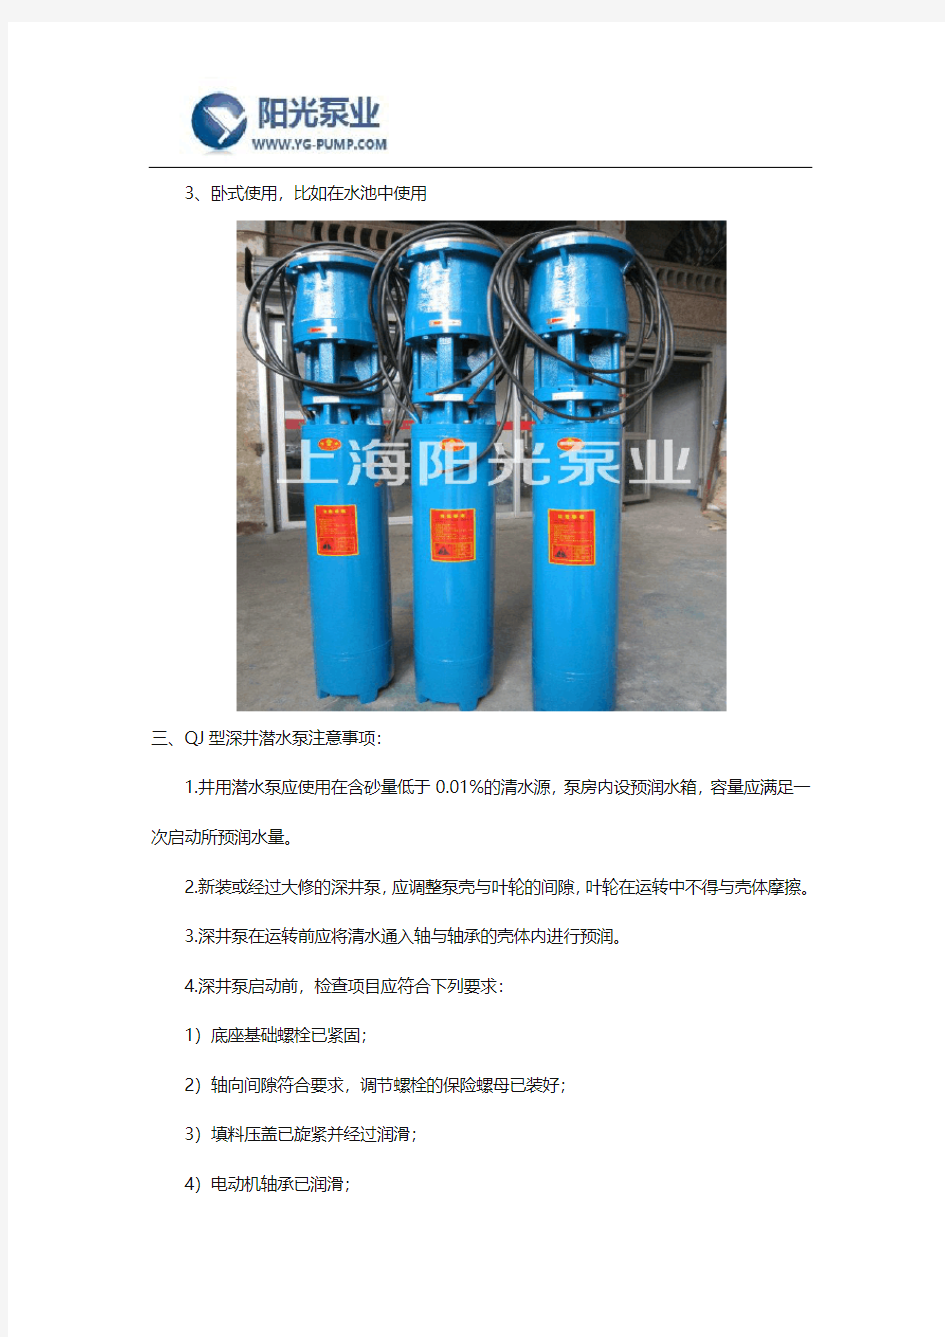 QJ型深井潜水泵用途及品牌特点